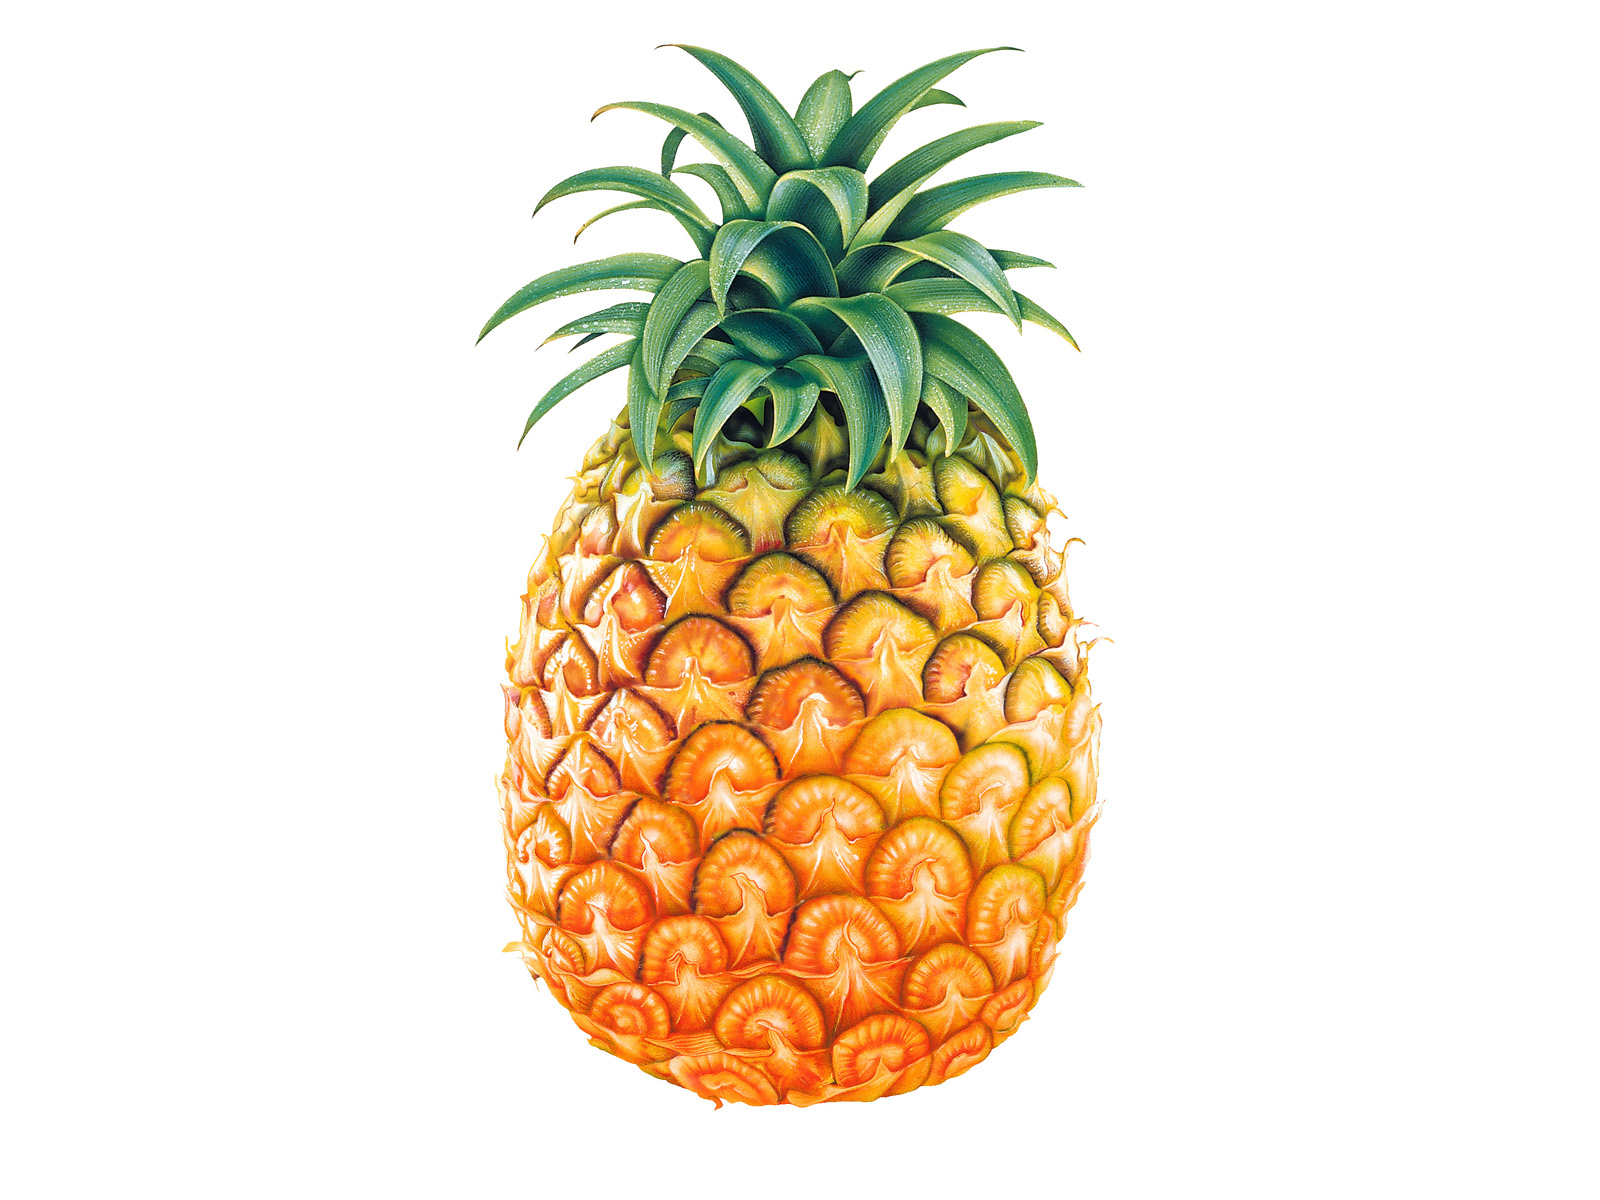 Tasty Pineapple Wallpaper Stock Photos